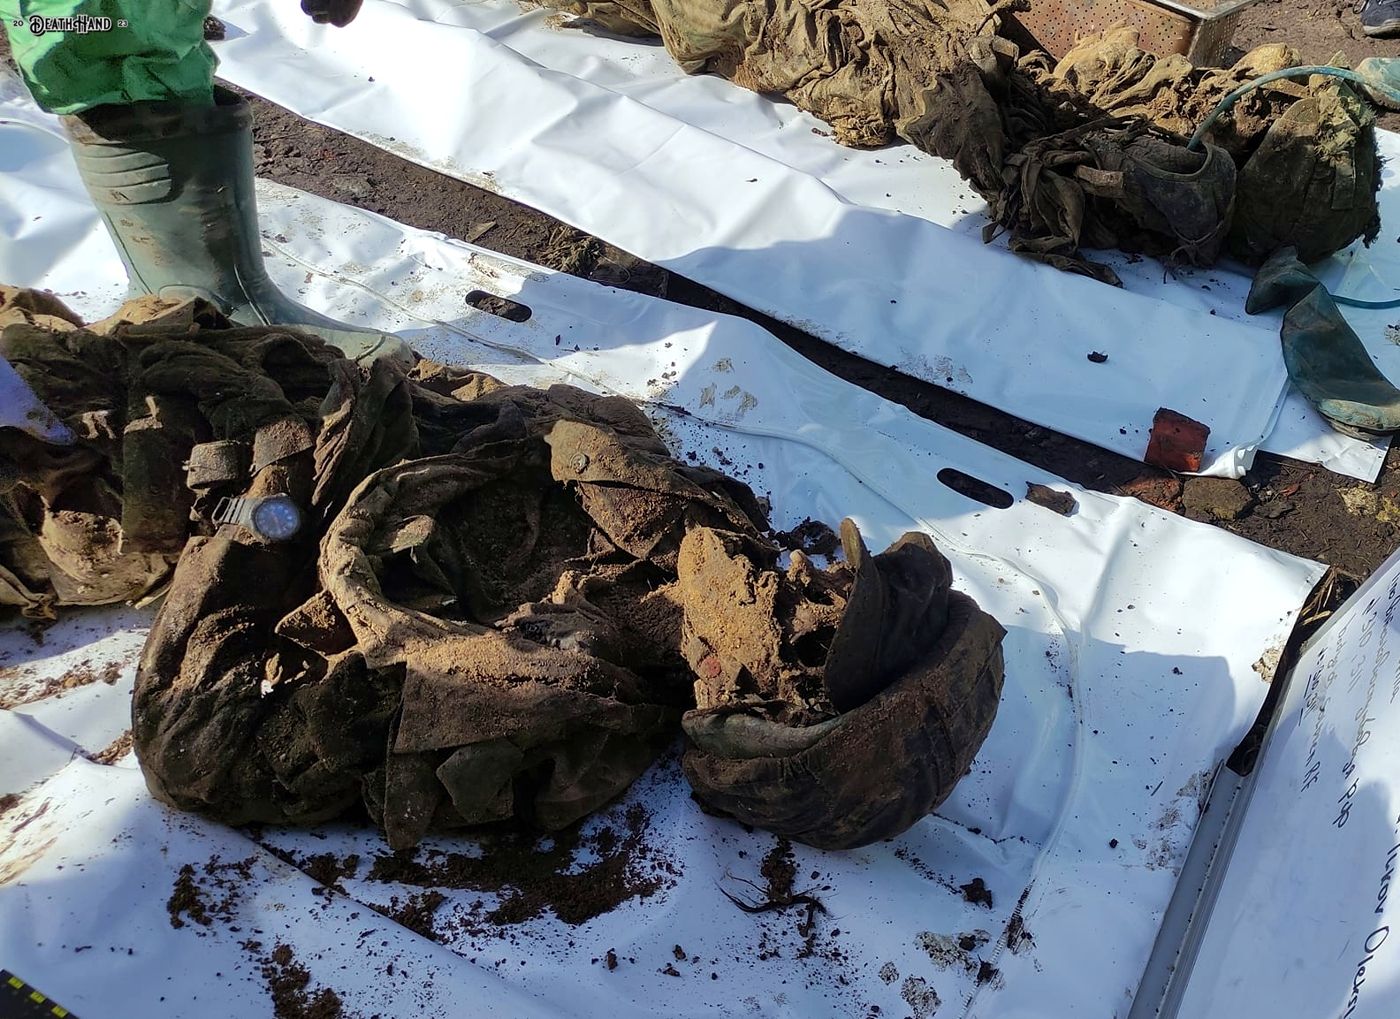 DH - Black Tulips find remove bodies 2 KIA RU soldiers from cellar one yr after died 5 - Krasn...jpg